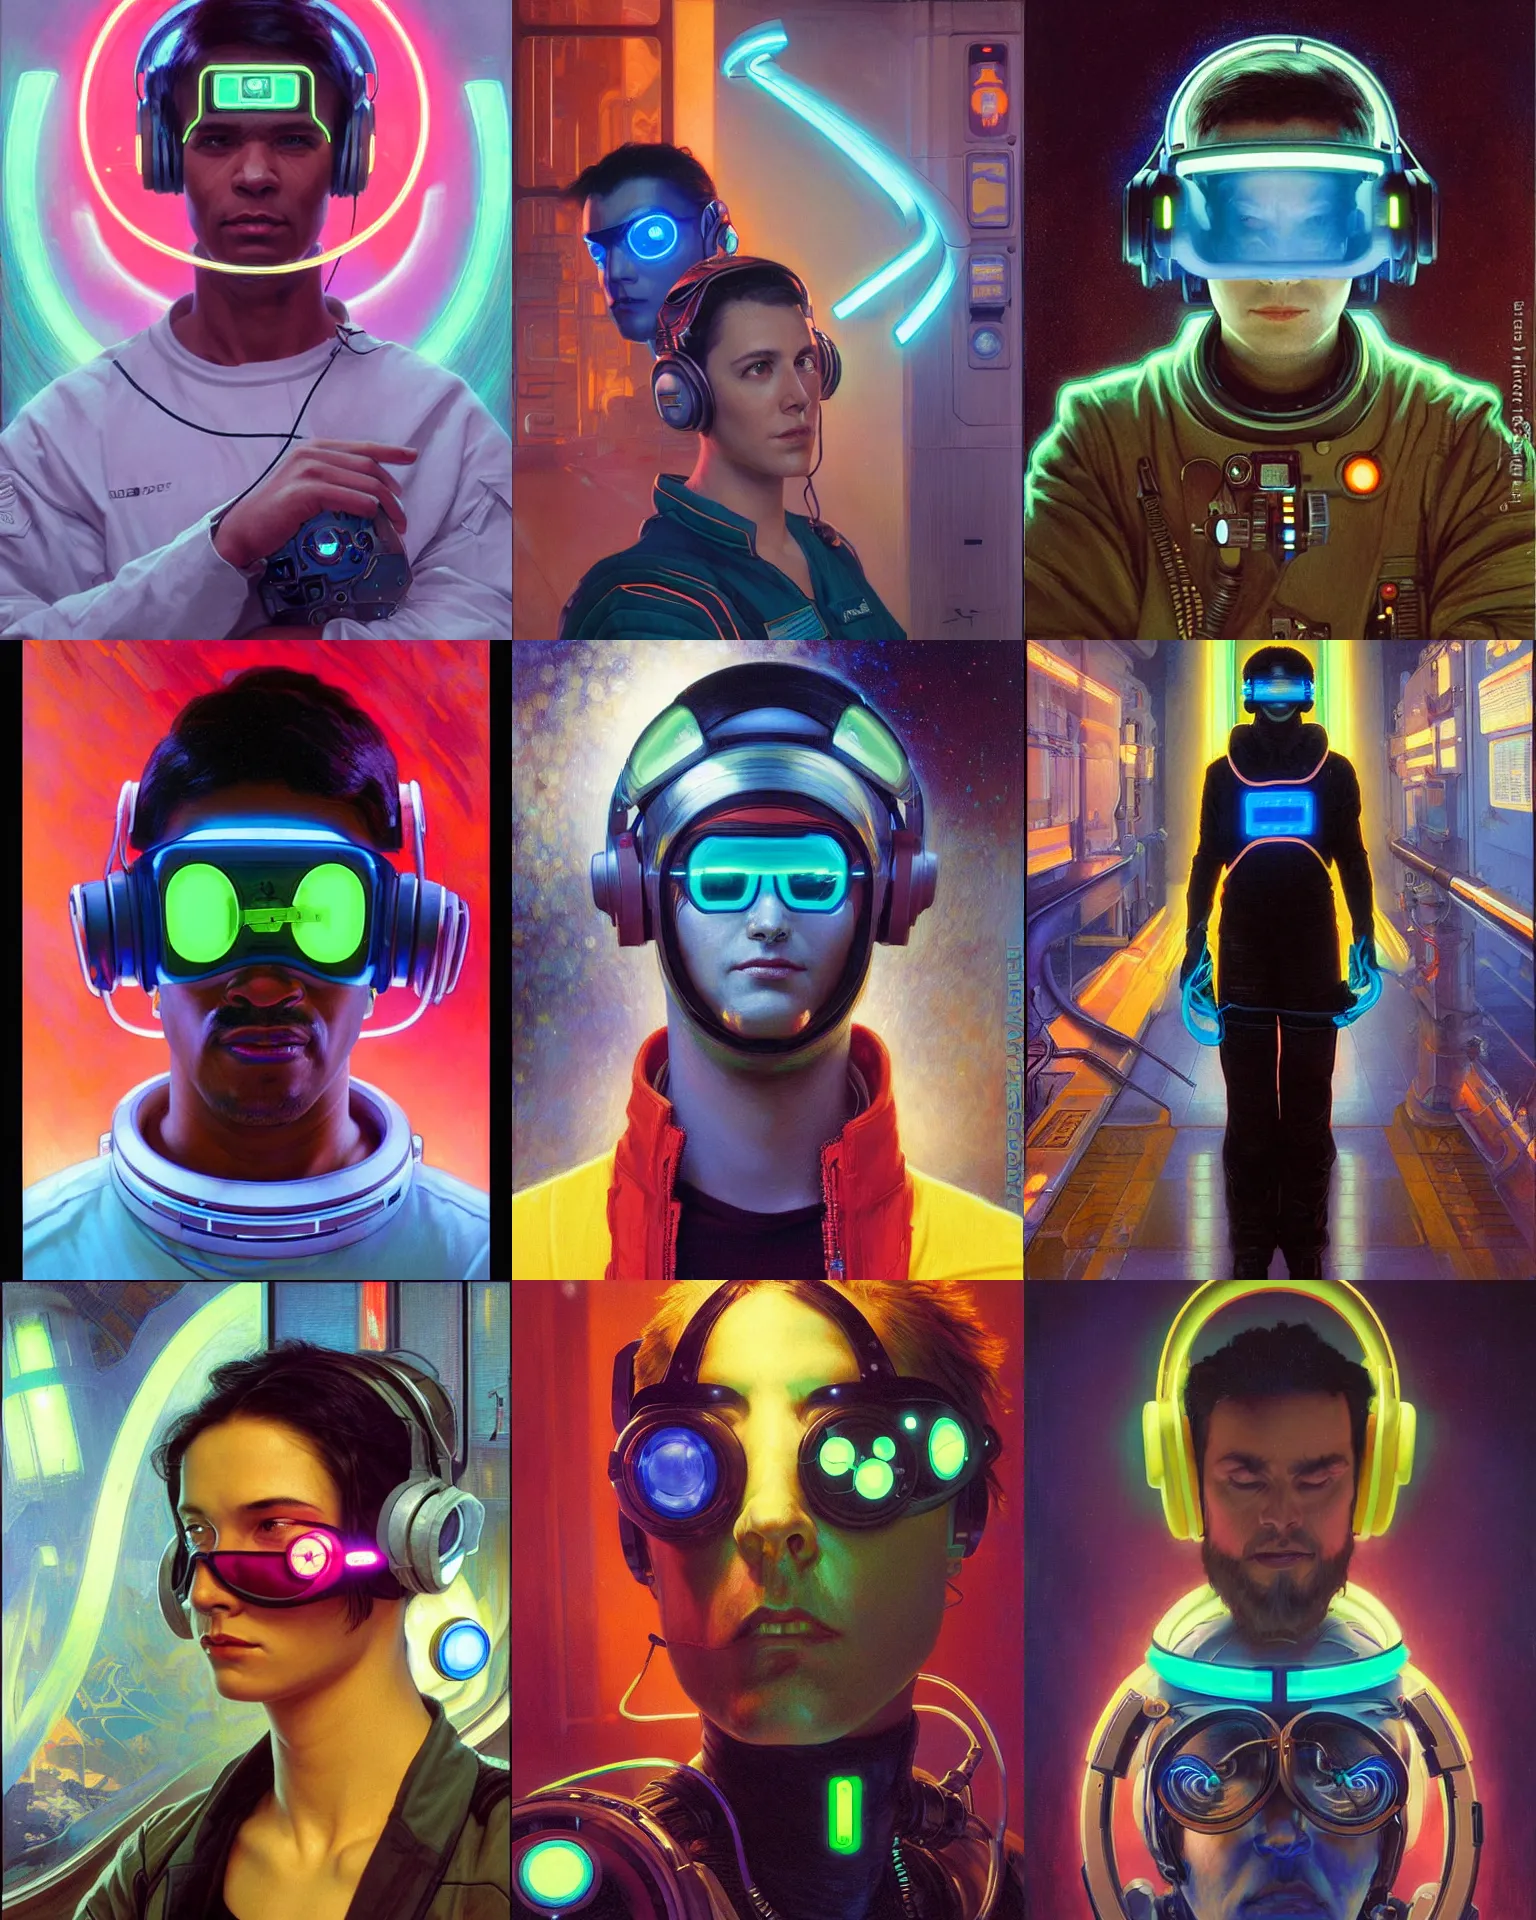 Prompt: neon cyberpunk programmer with glowing geordi visor over eyes and sleek headphones headshot avatar painting by donato giancola, rhads, loish, alphonse mucha, mead schaeffer astronaut fashion photography